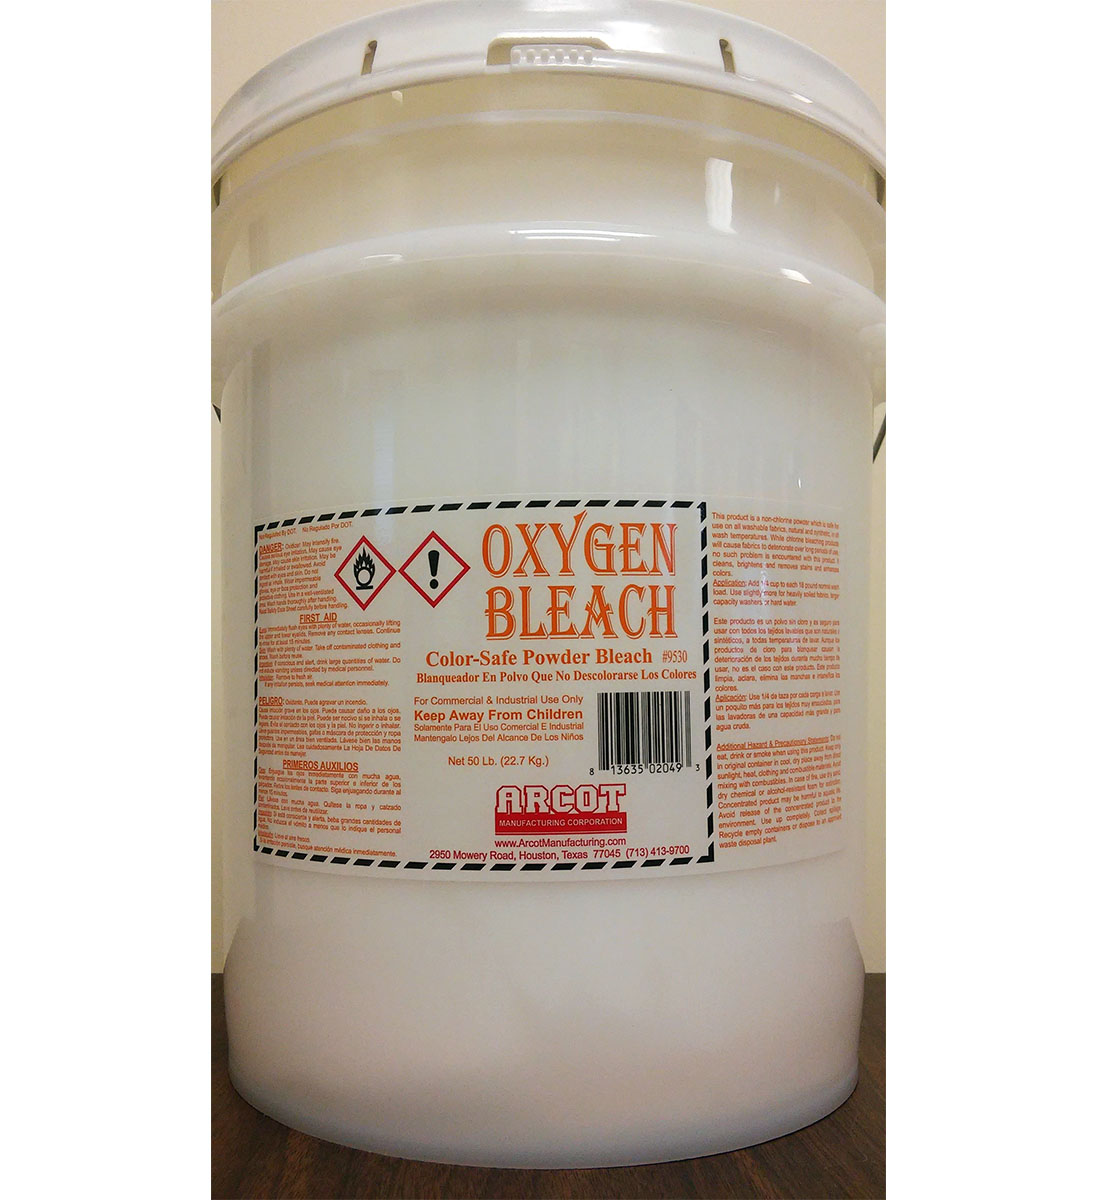 bleaching powder has odour of chlorine